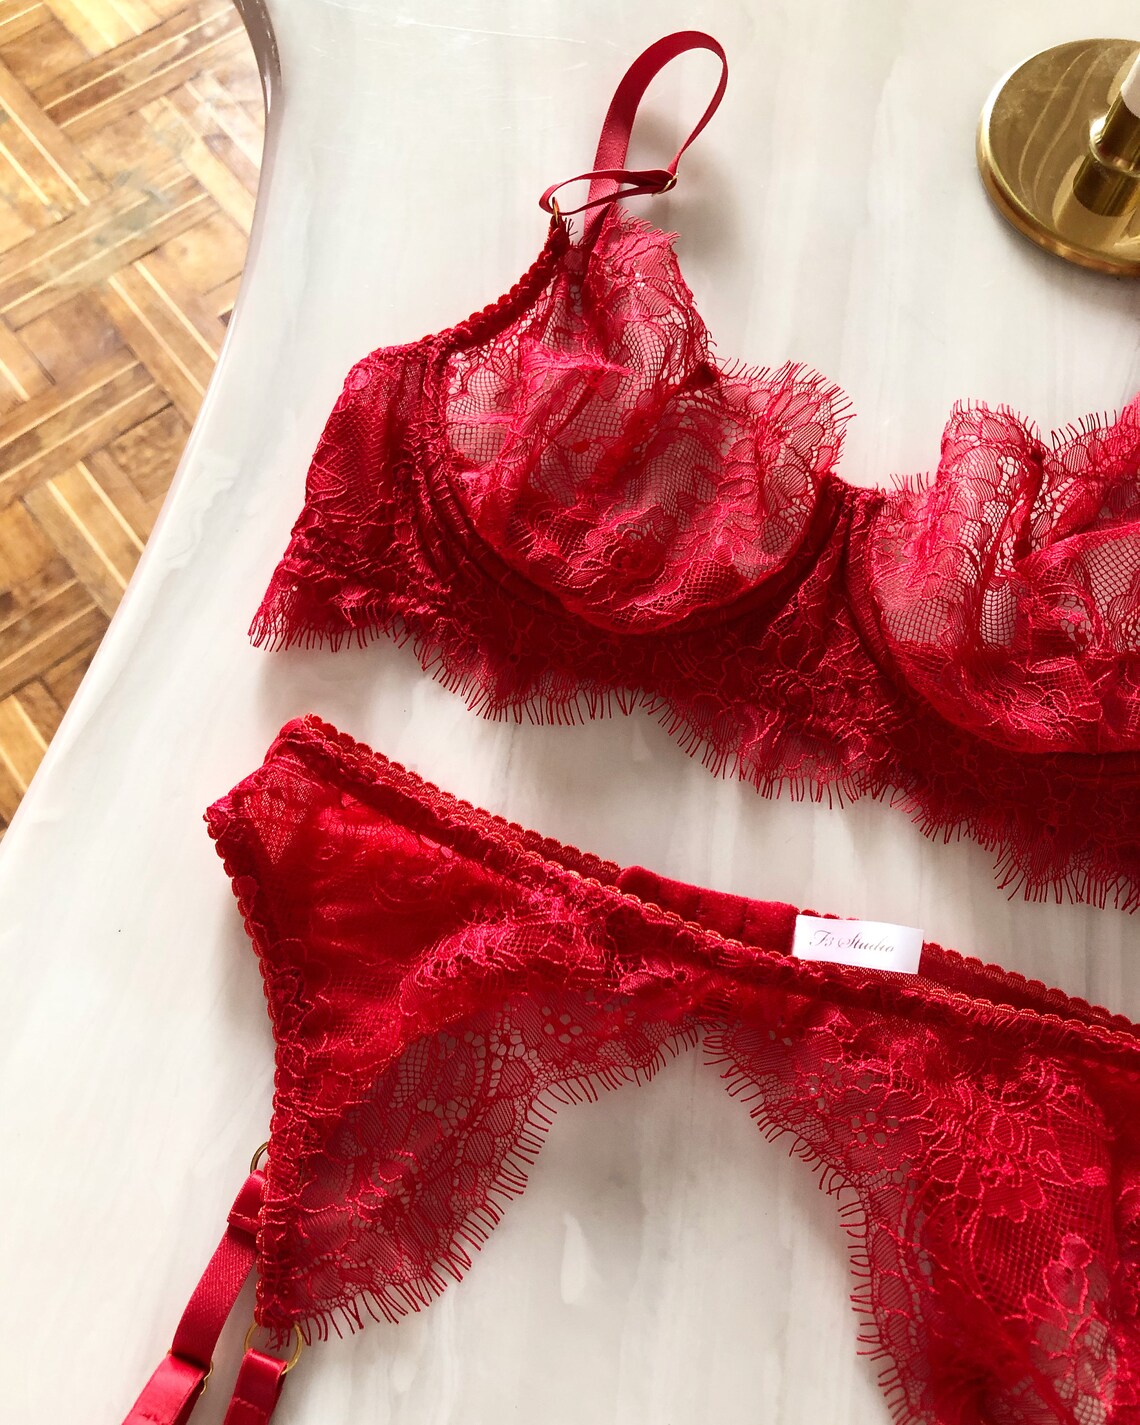 Red lingerie/ lace lingerie / sheer lingerie / sexy lingerie/ | Etsy